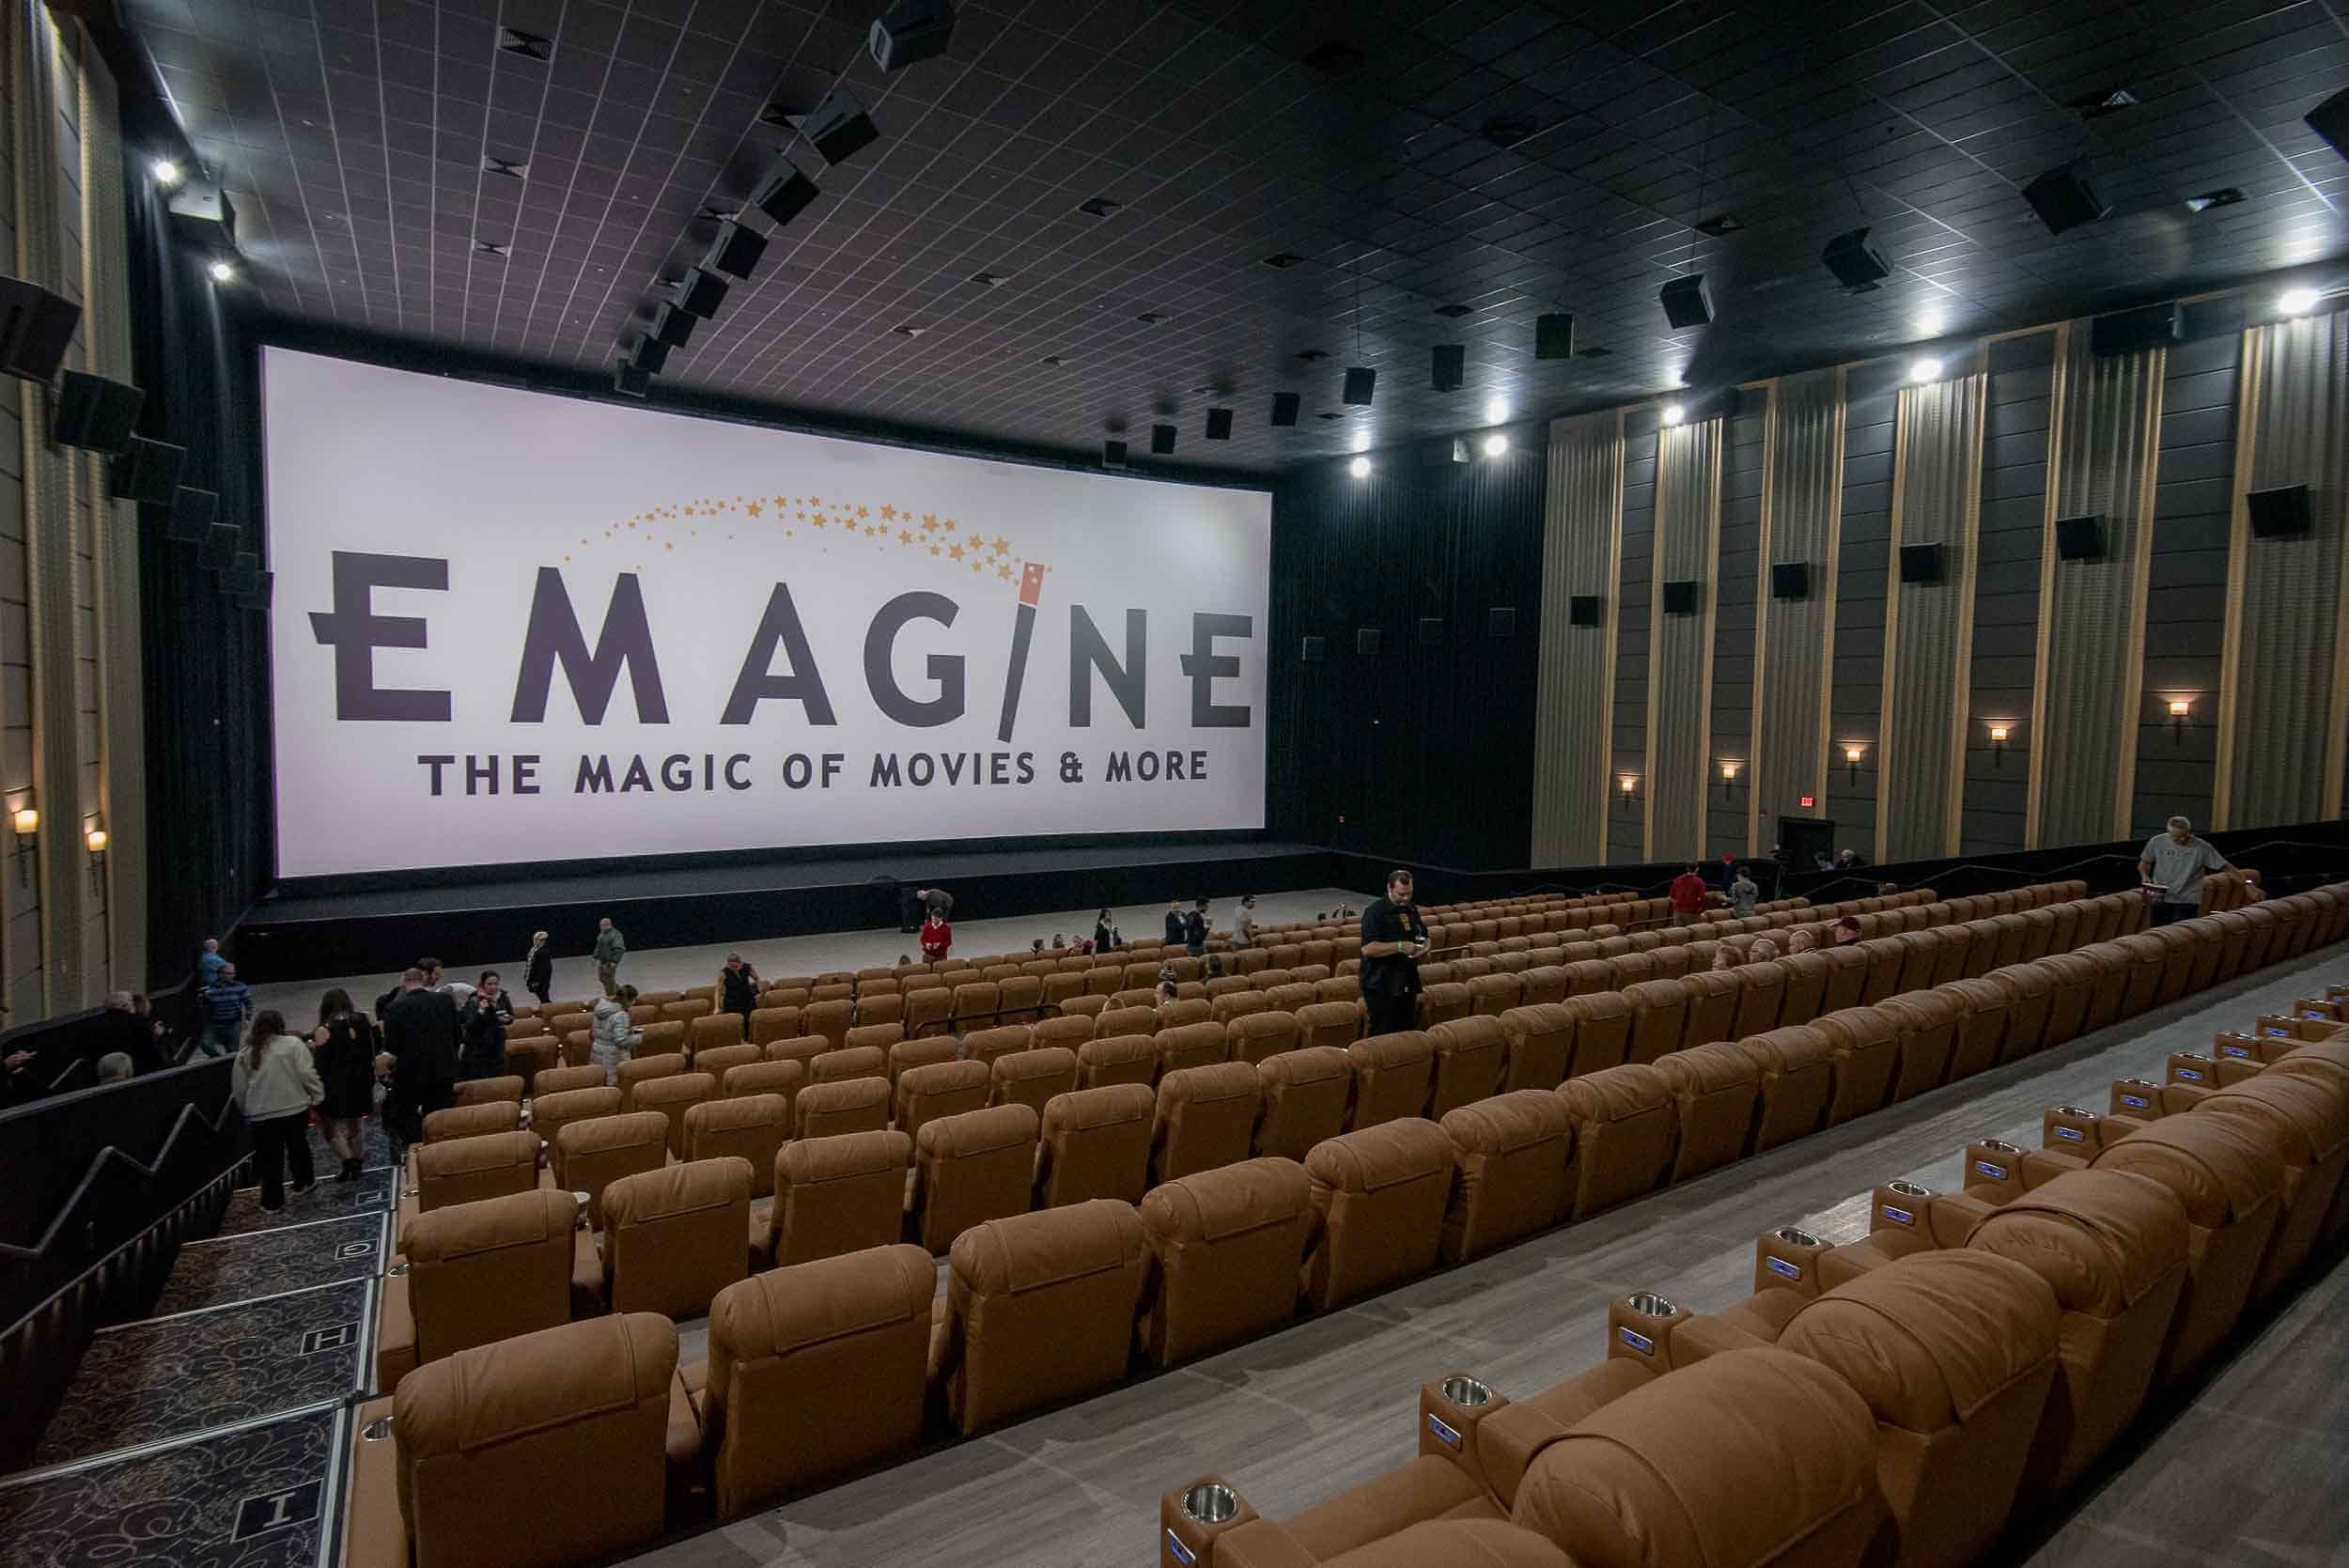 Emagine Canton now boasts biggest movie screen in Michigan